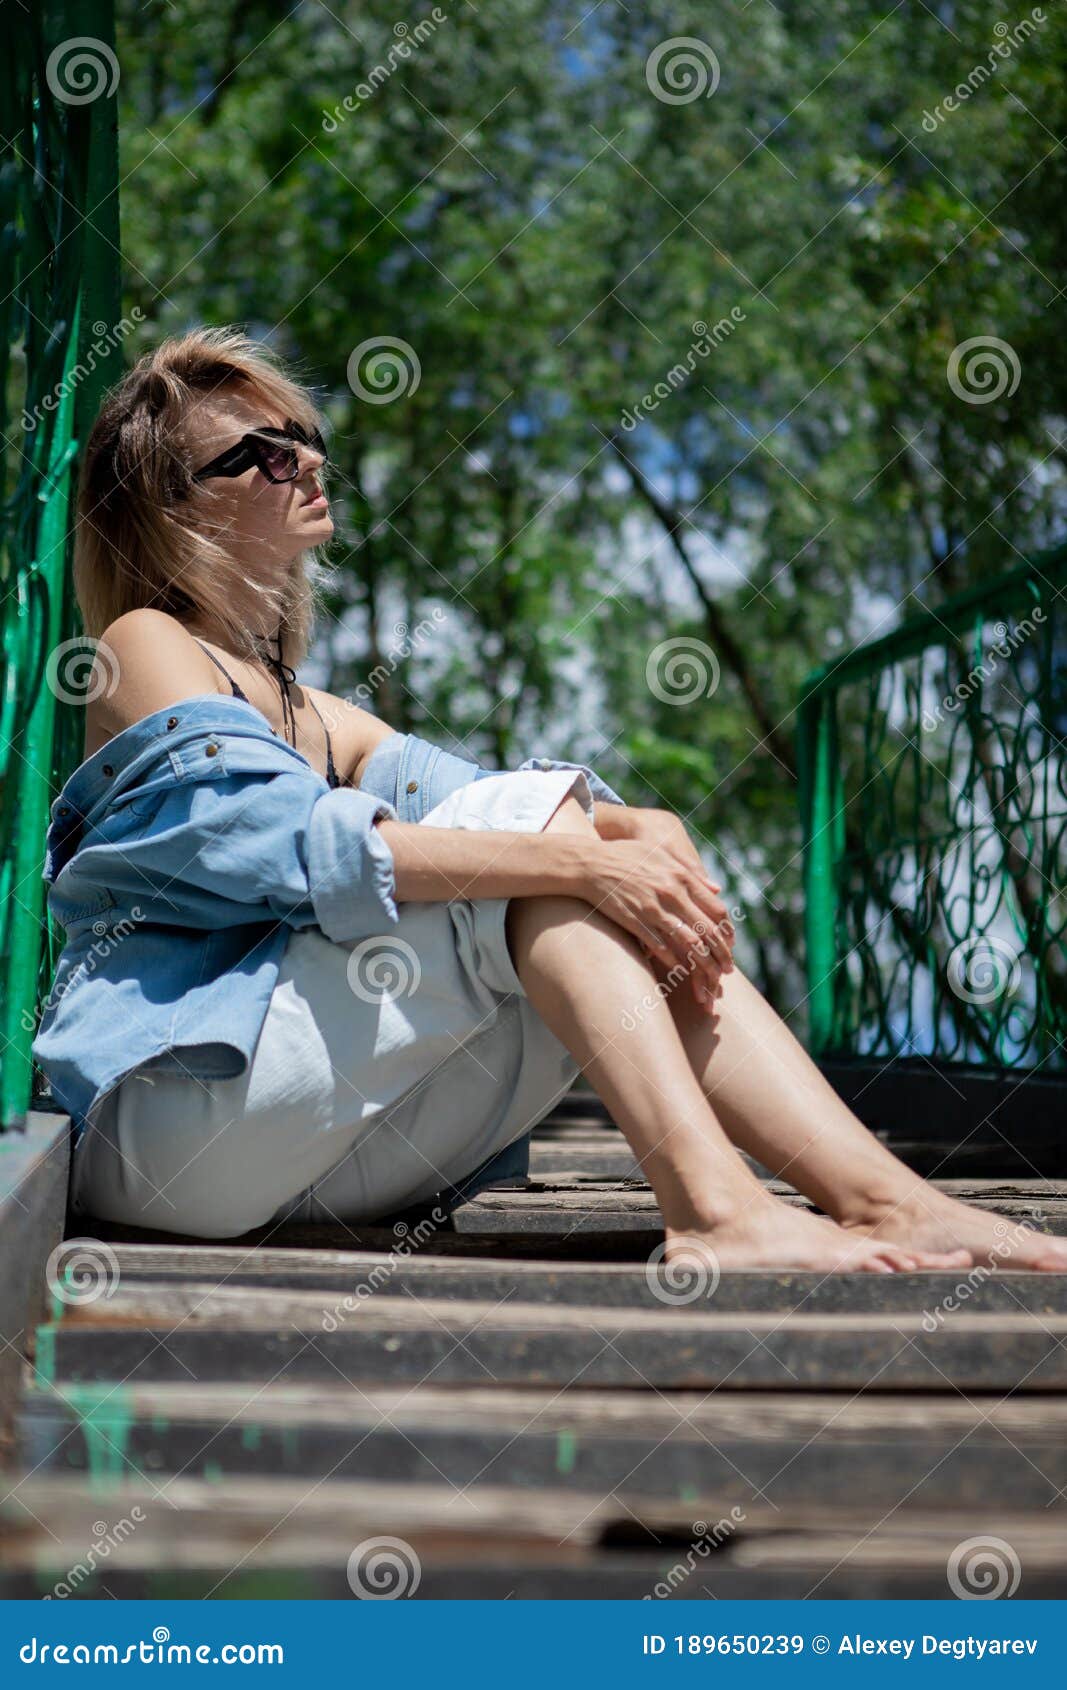 https://thumbs.dreamstime.com/z/girl-blond-hair-sunglasses-sitting-stairs-leaning-railing-woman-denim-suit-bare-feet-189650239.jpg